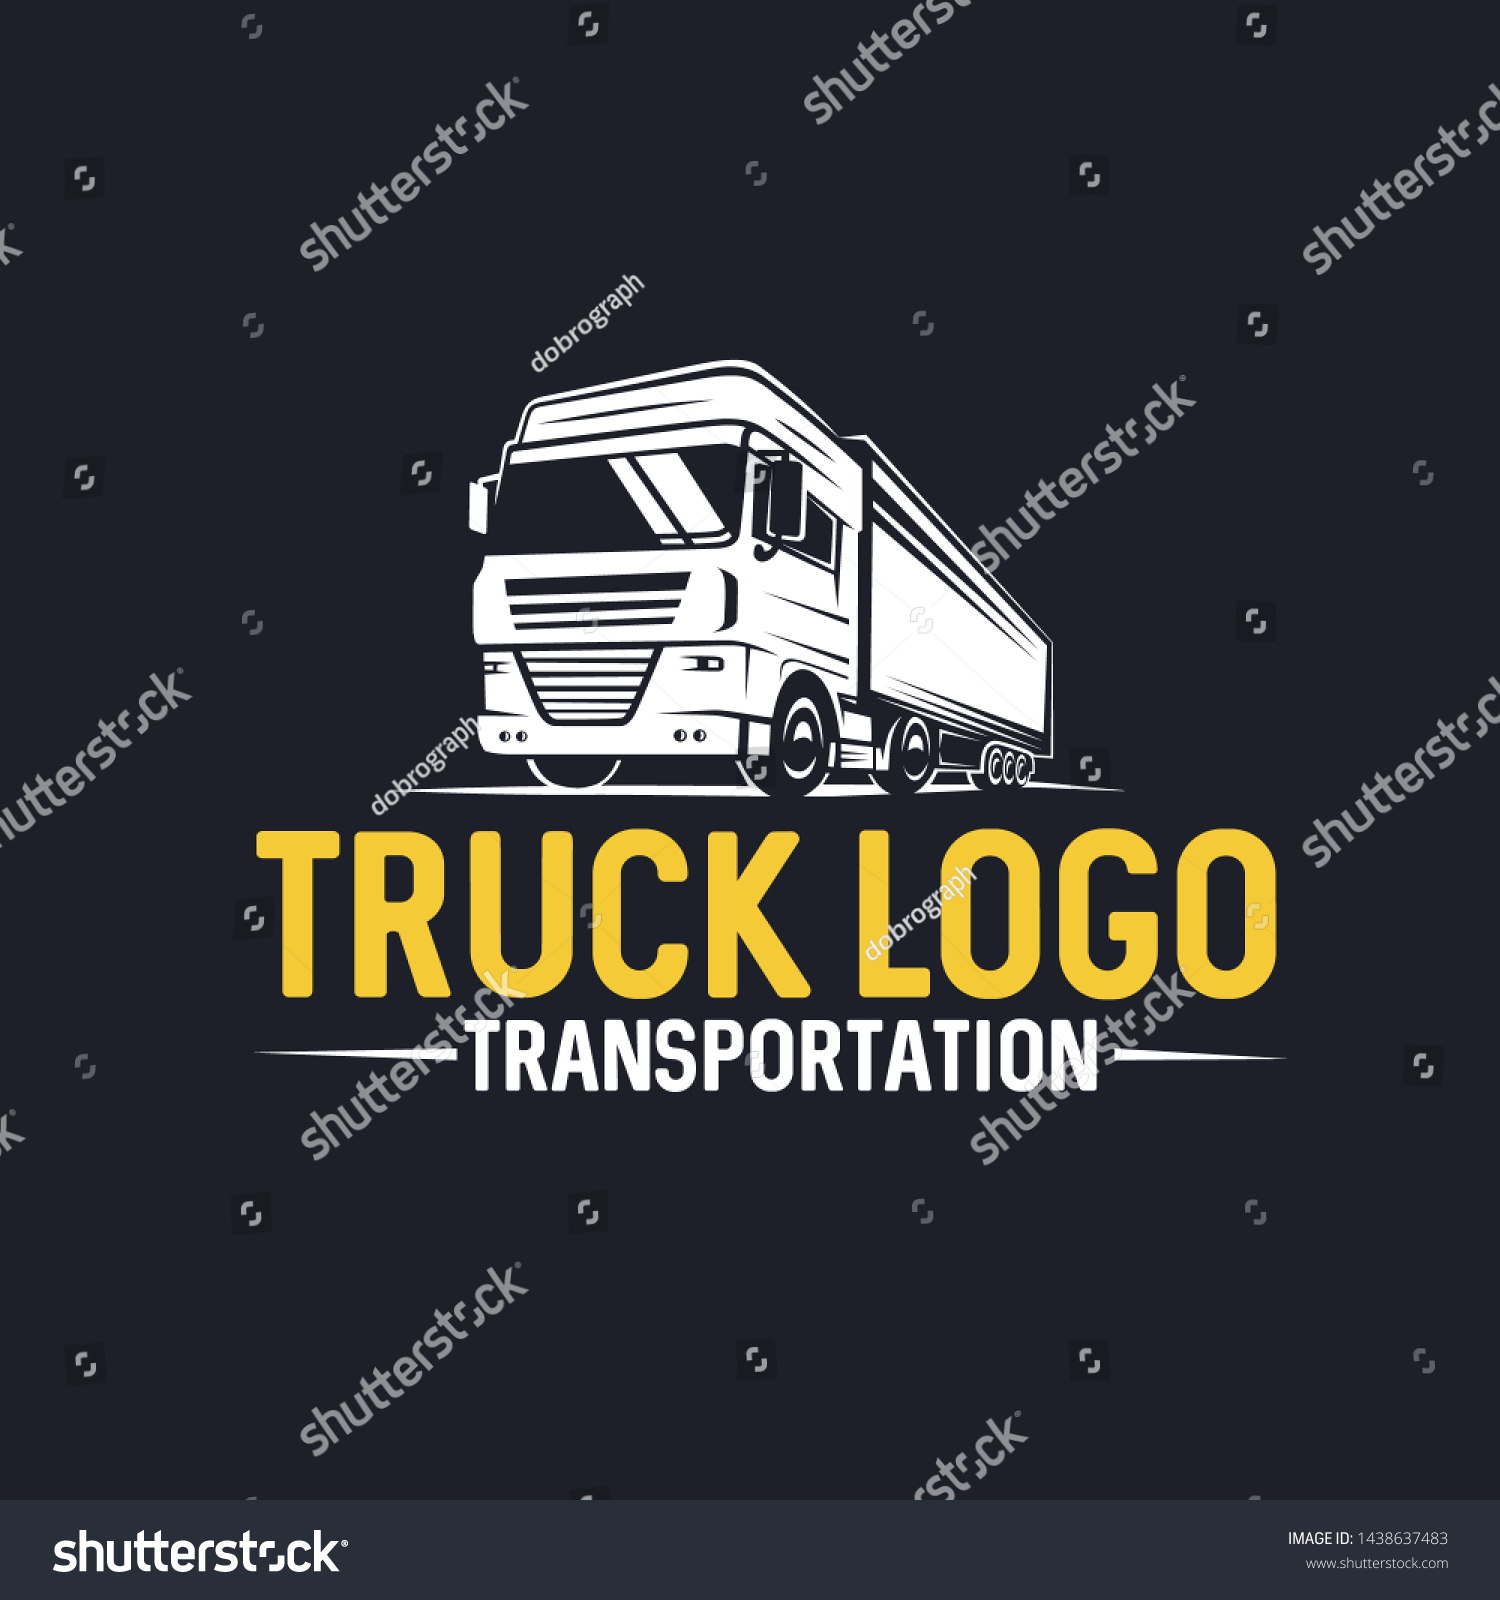 Truck Logo Transportation Monochrome Style Vector Stock Vector Royalty Free